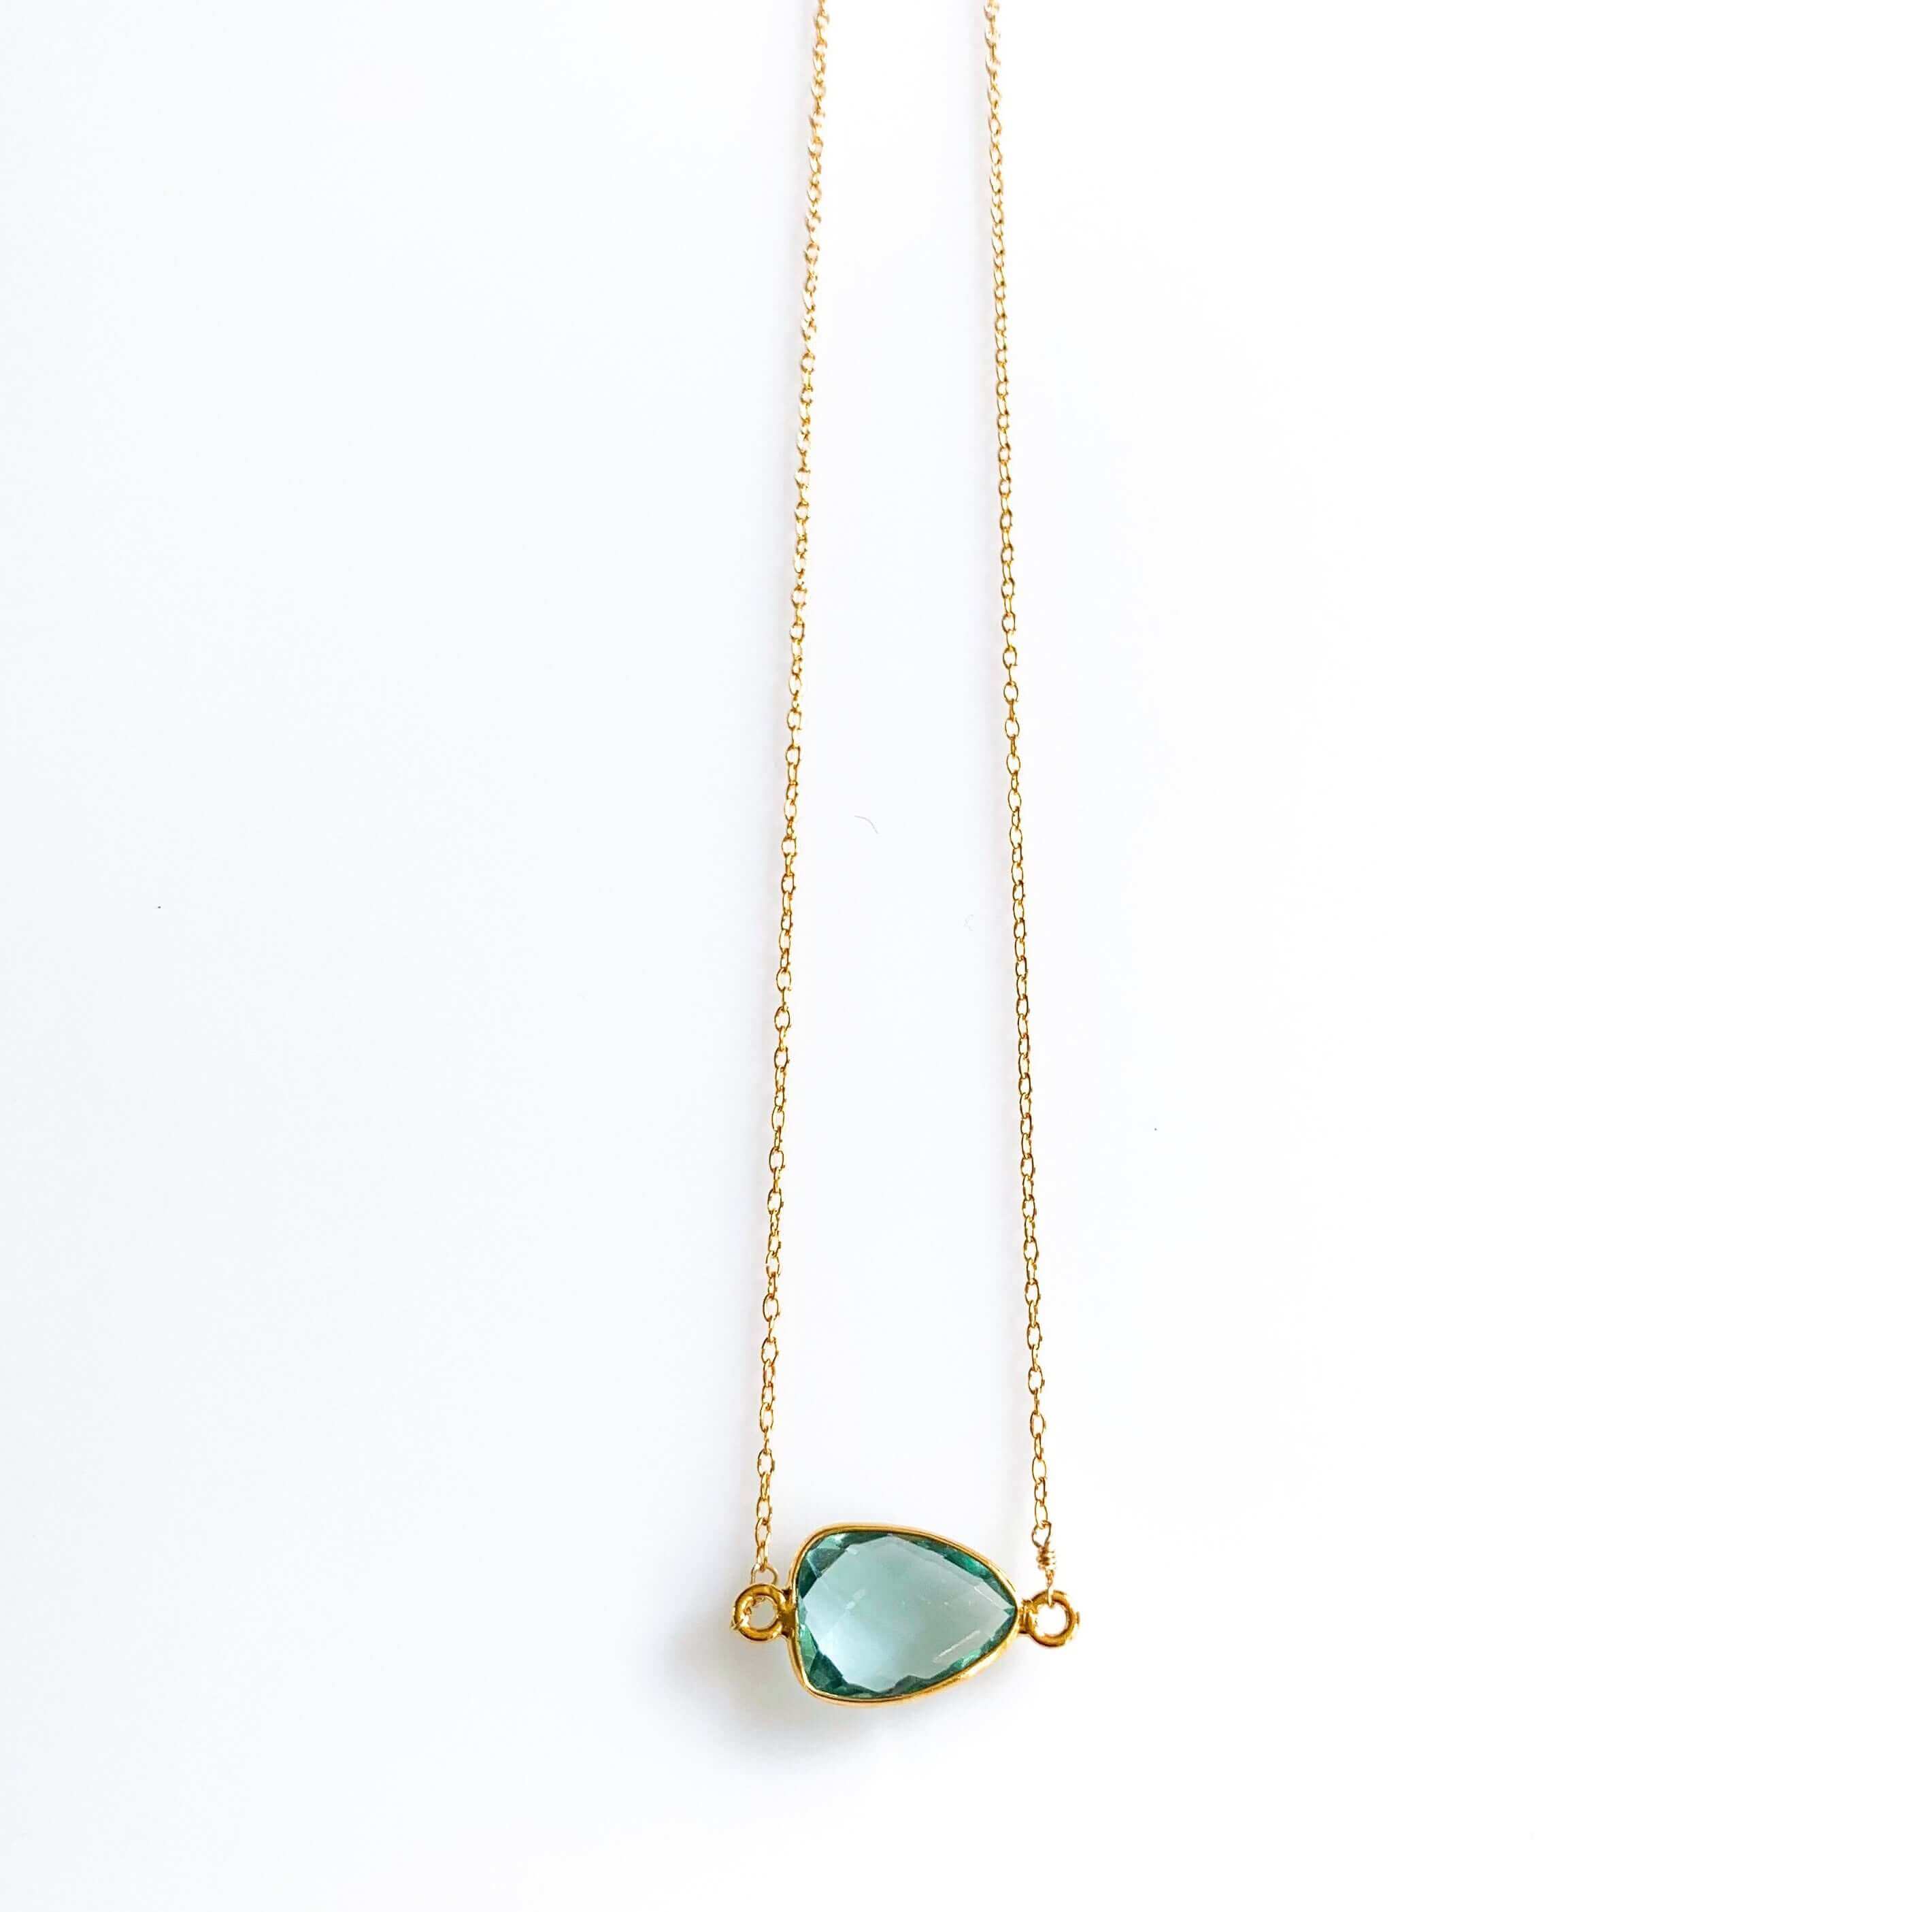 Bezel-Set Green Amethysts in a 14k Gold Necklace